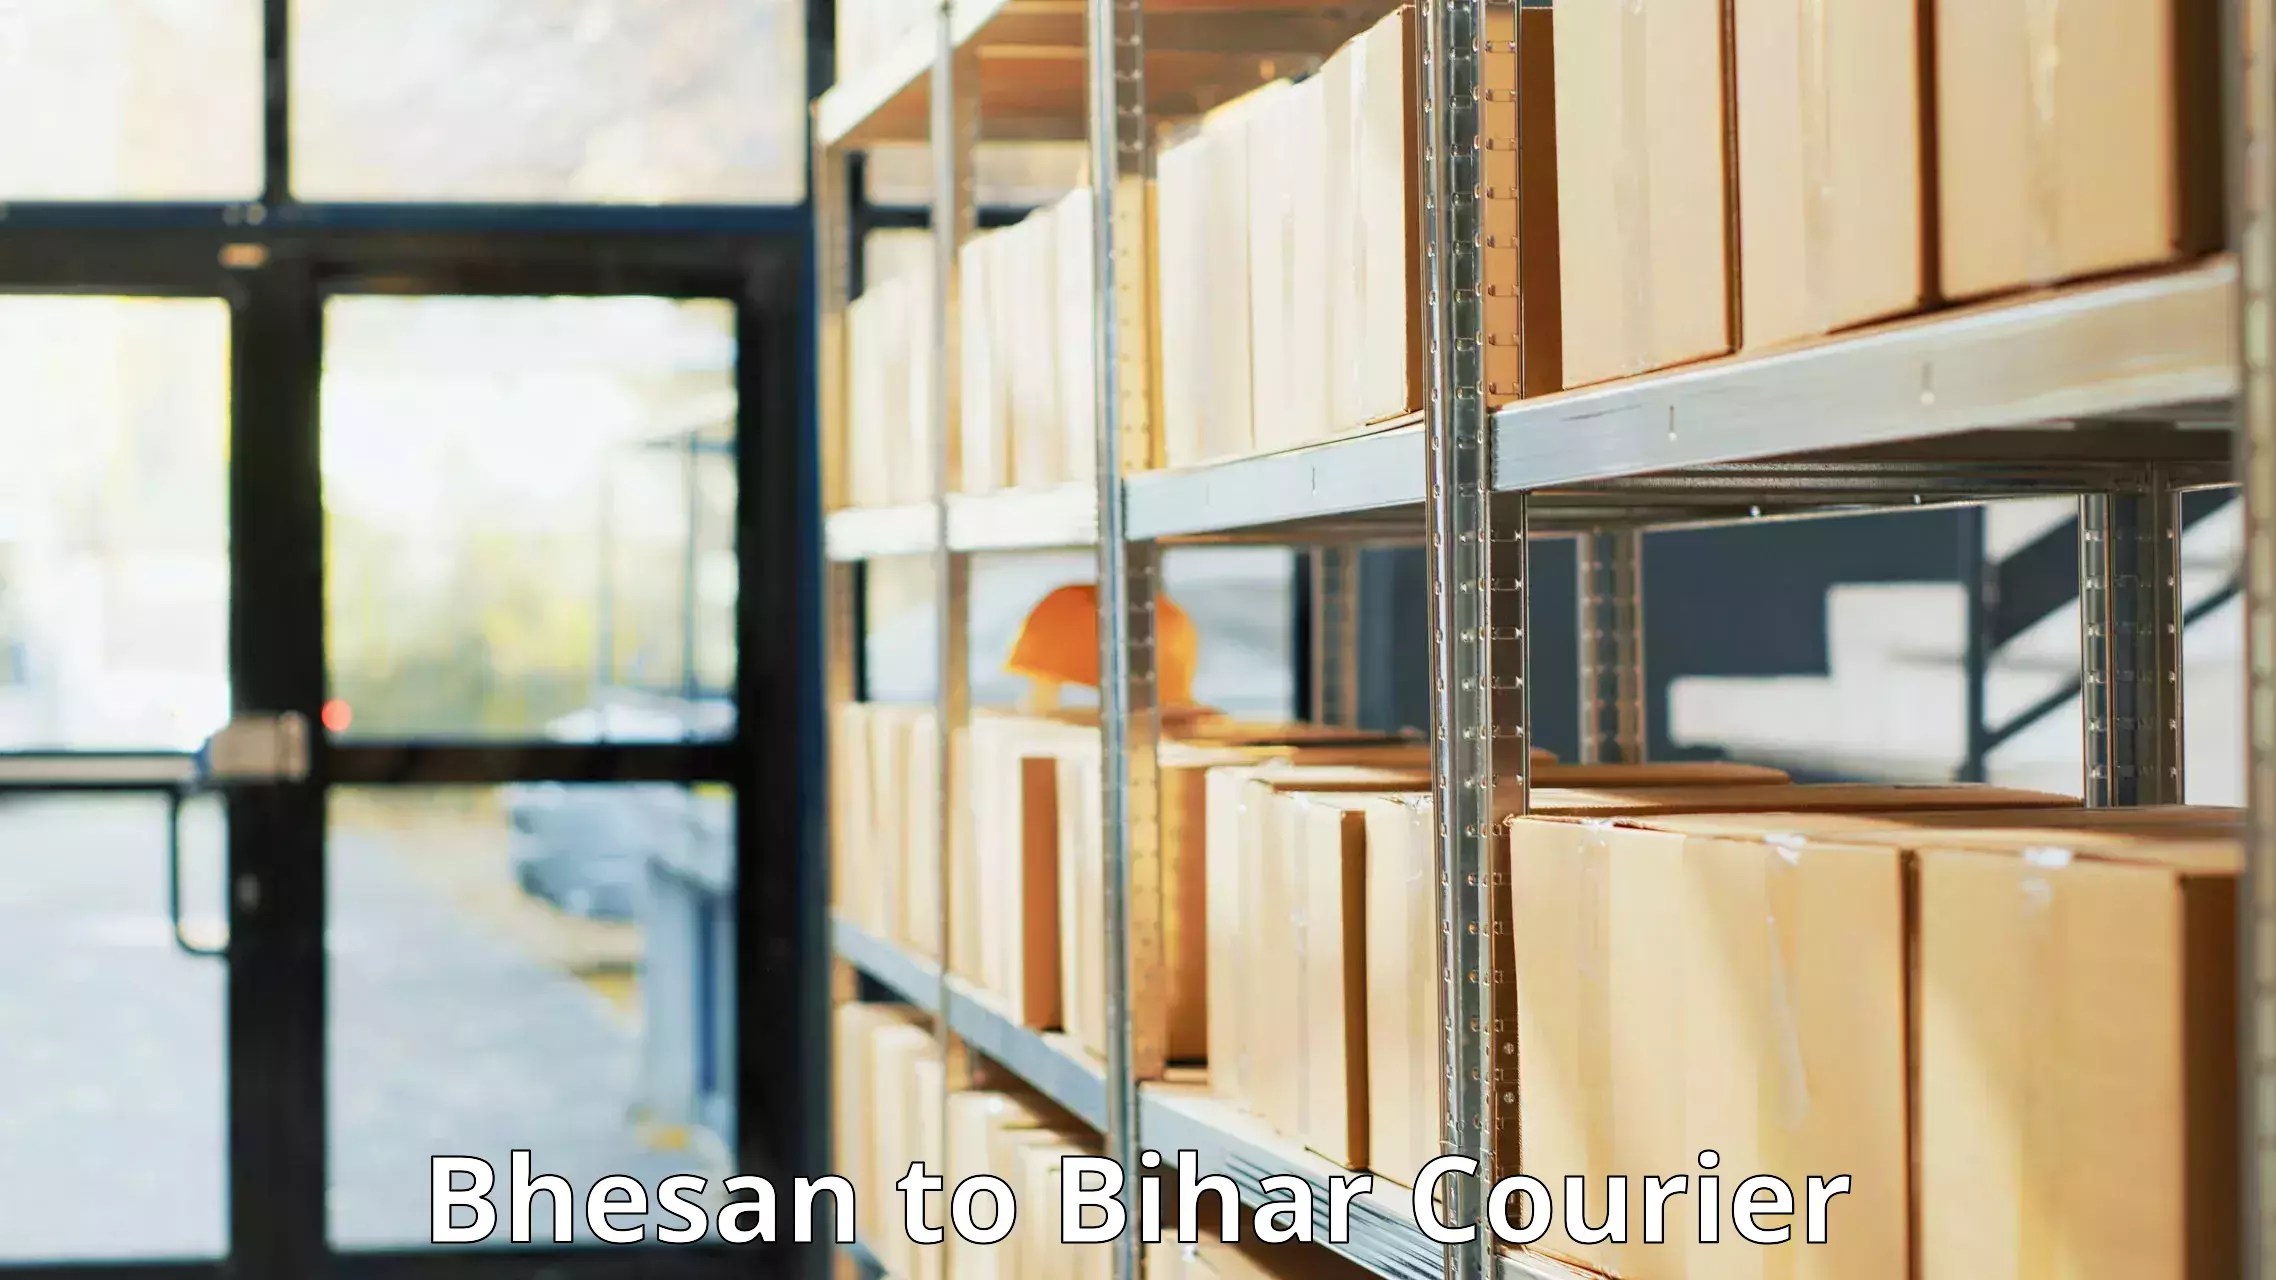 Easy return solutions Bhesan to Bihar